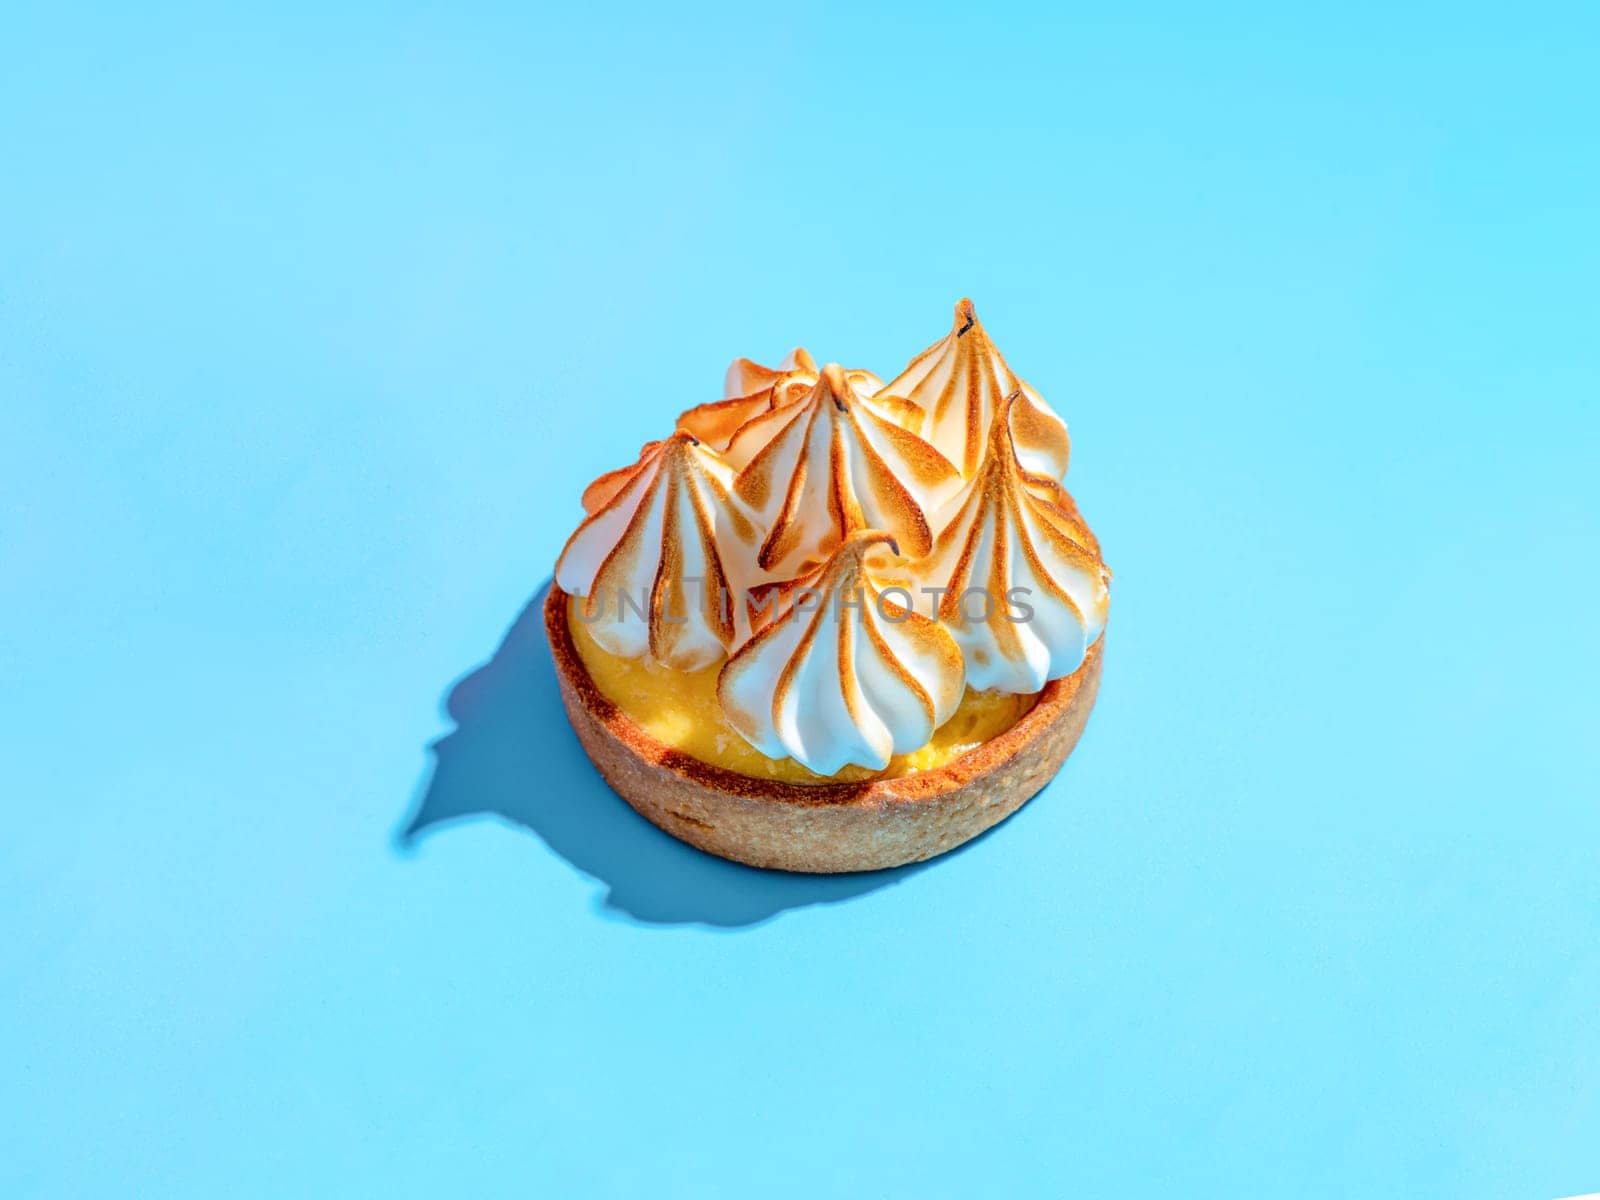 Lemon tart with burnt meringue, blue background by fascinadora